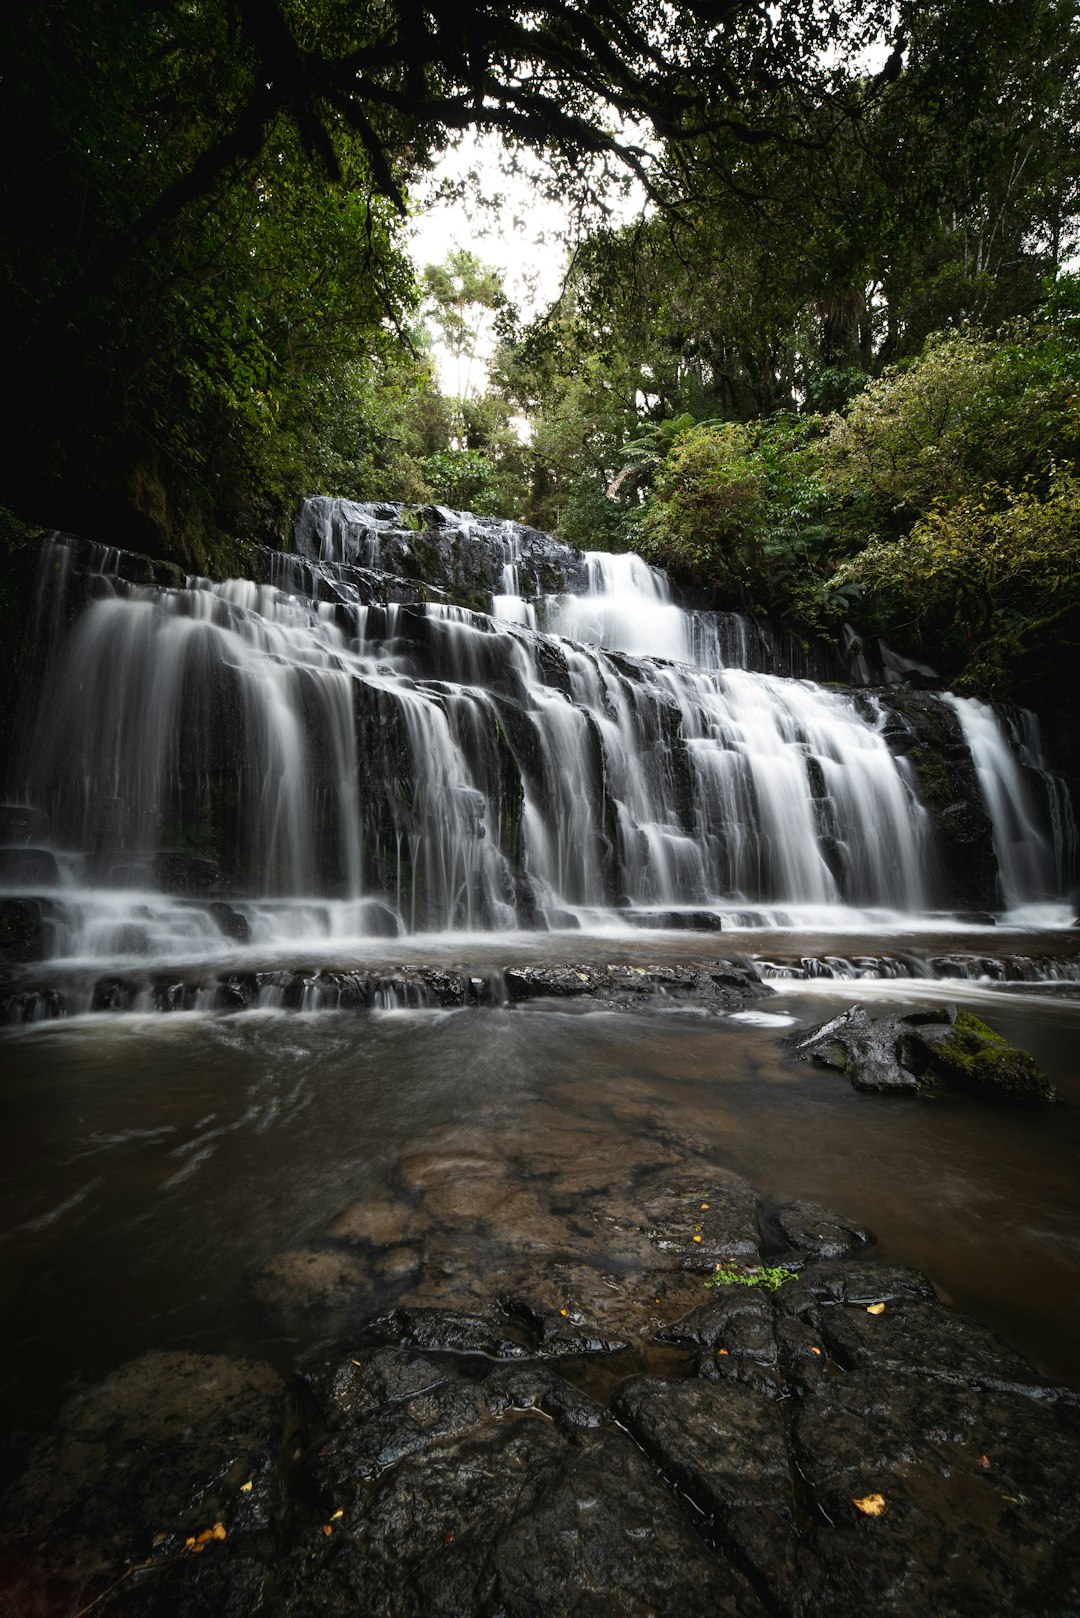 Travel Tips and Stories of Purakaunui Falls in New Zealand